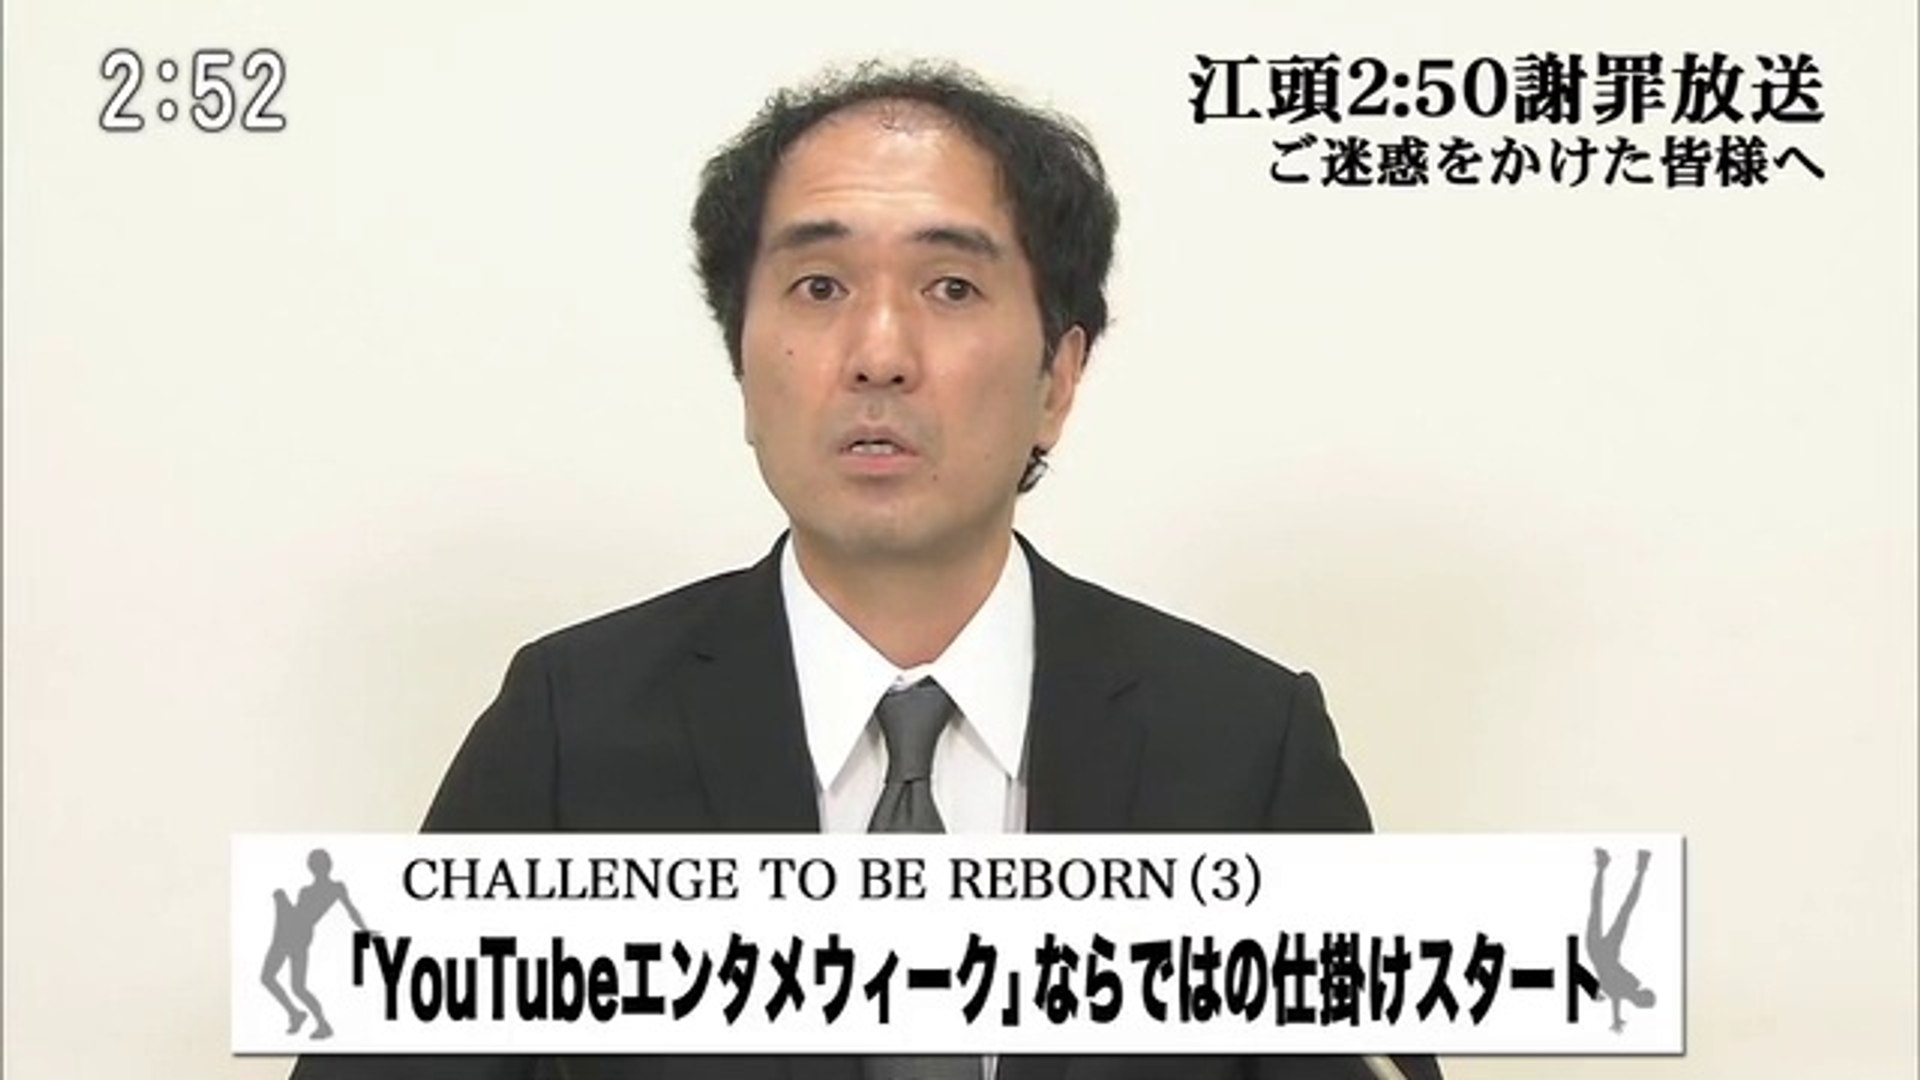 江頭2 50 謝罪放送 復活への挑戦 1日目 動画 Dailymotion